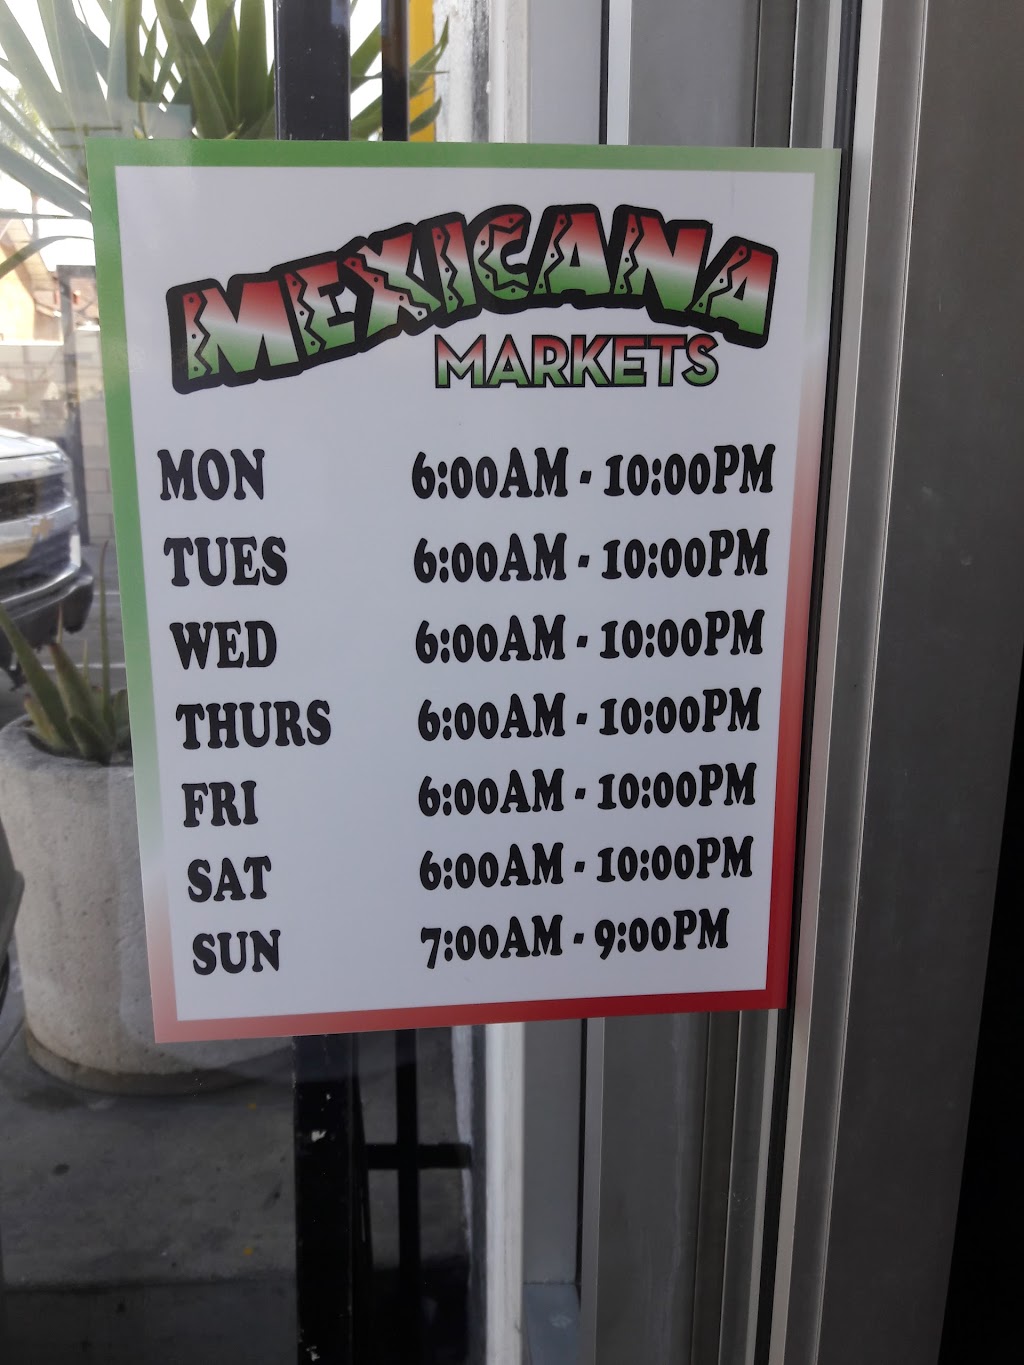 Mexicana Market carniceria | 13208 San Antonio Dr, Norwalk, CA 90650, USA | Phone: (562) 868-5331